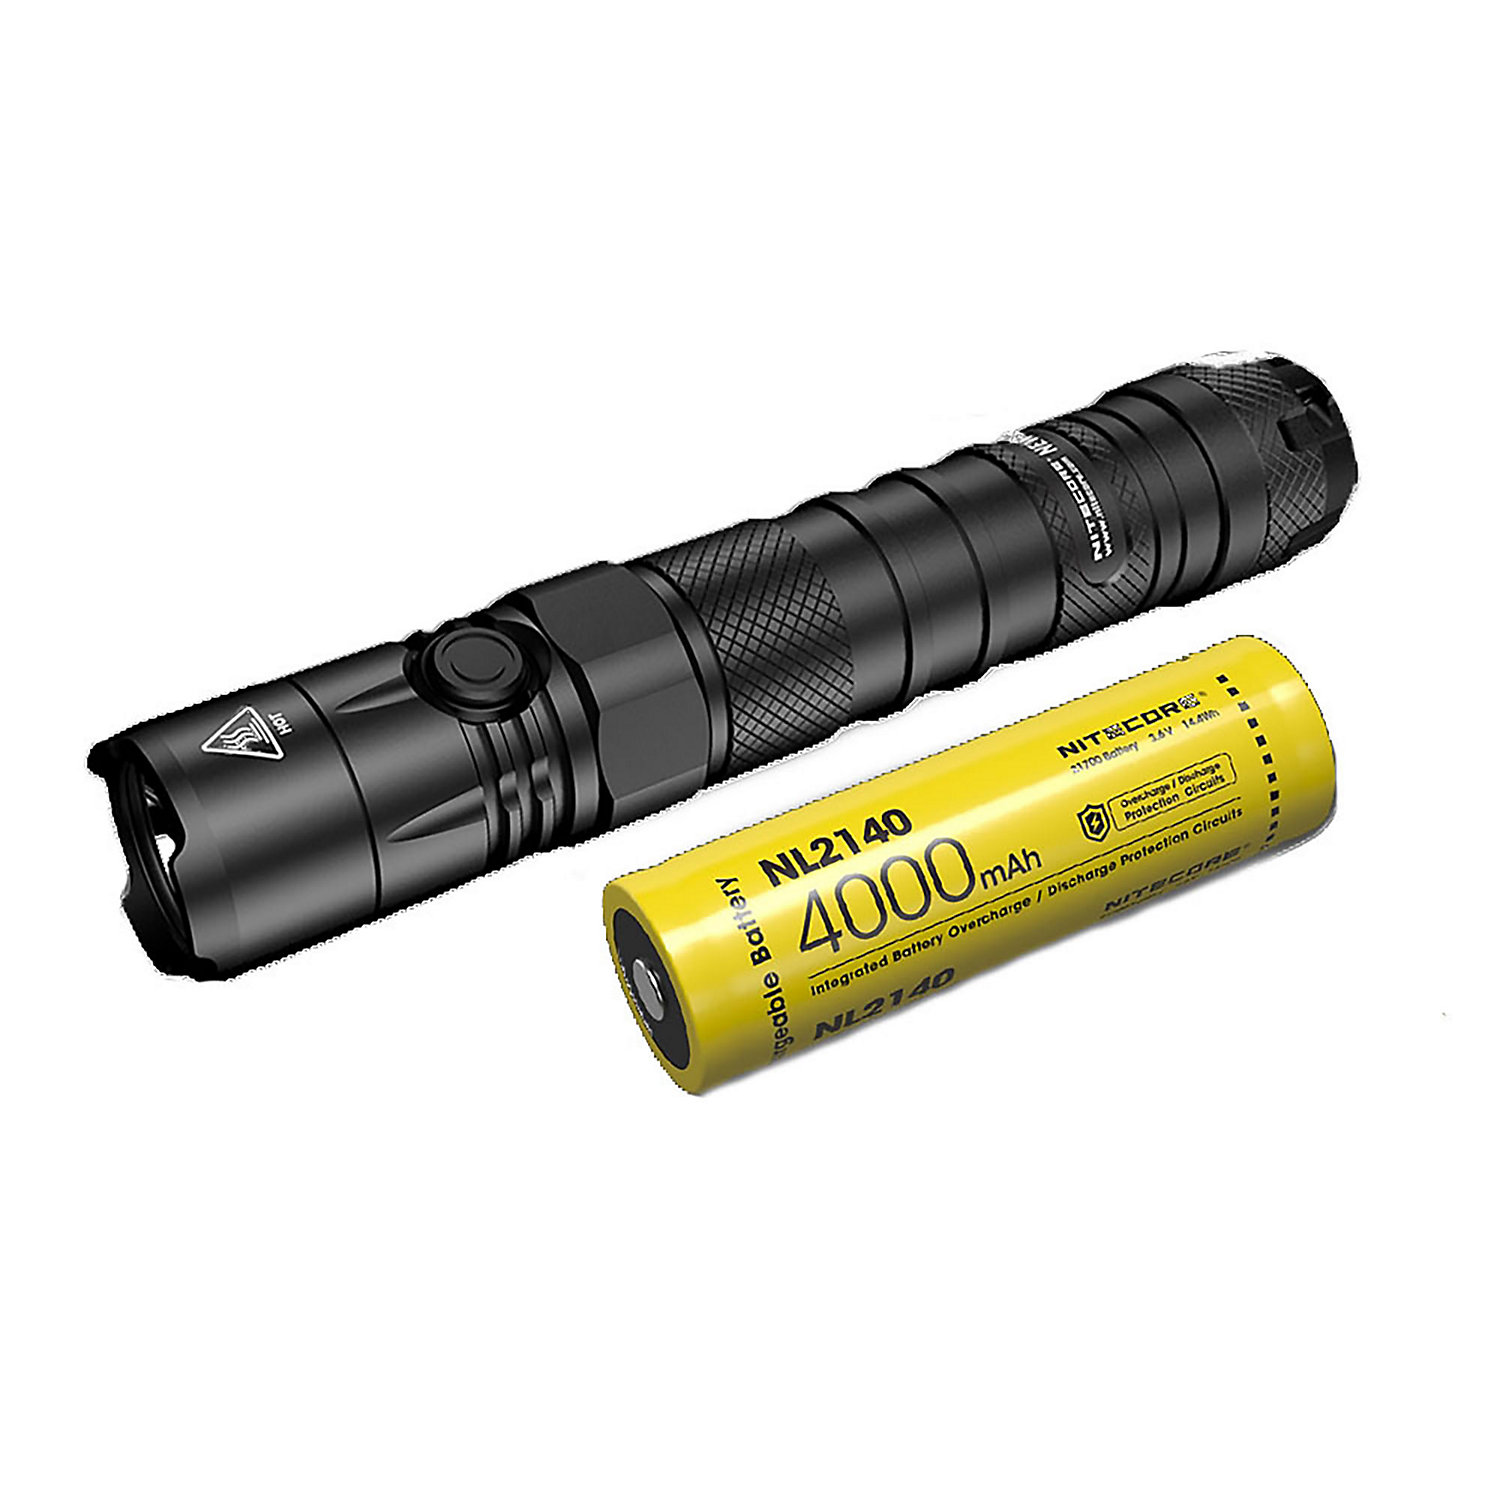 NITECORE NEW P12 1200 Lumen Flashlight + Rechargeable Battery